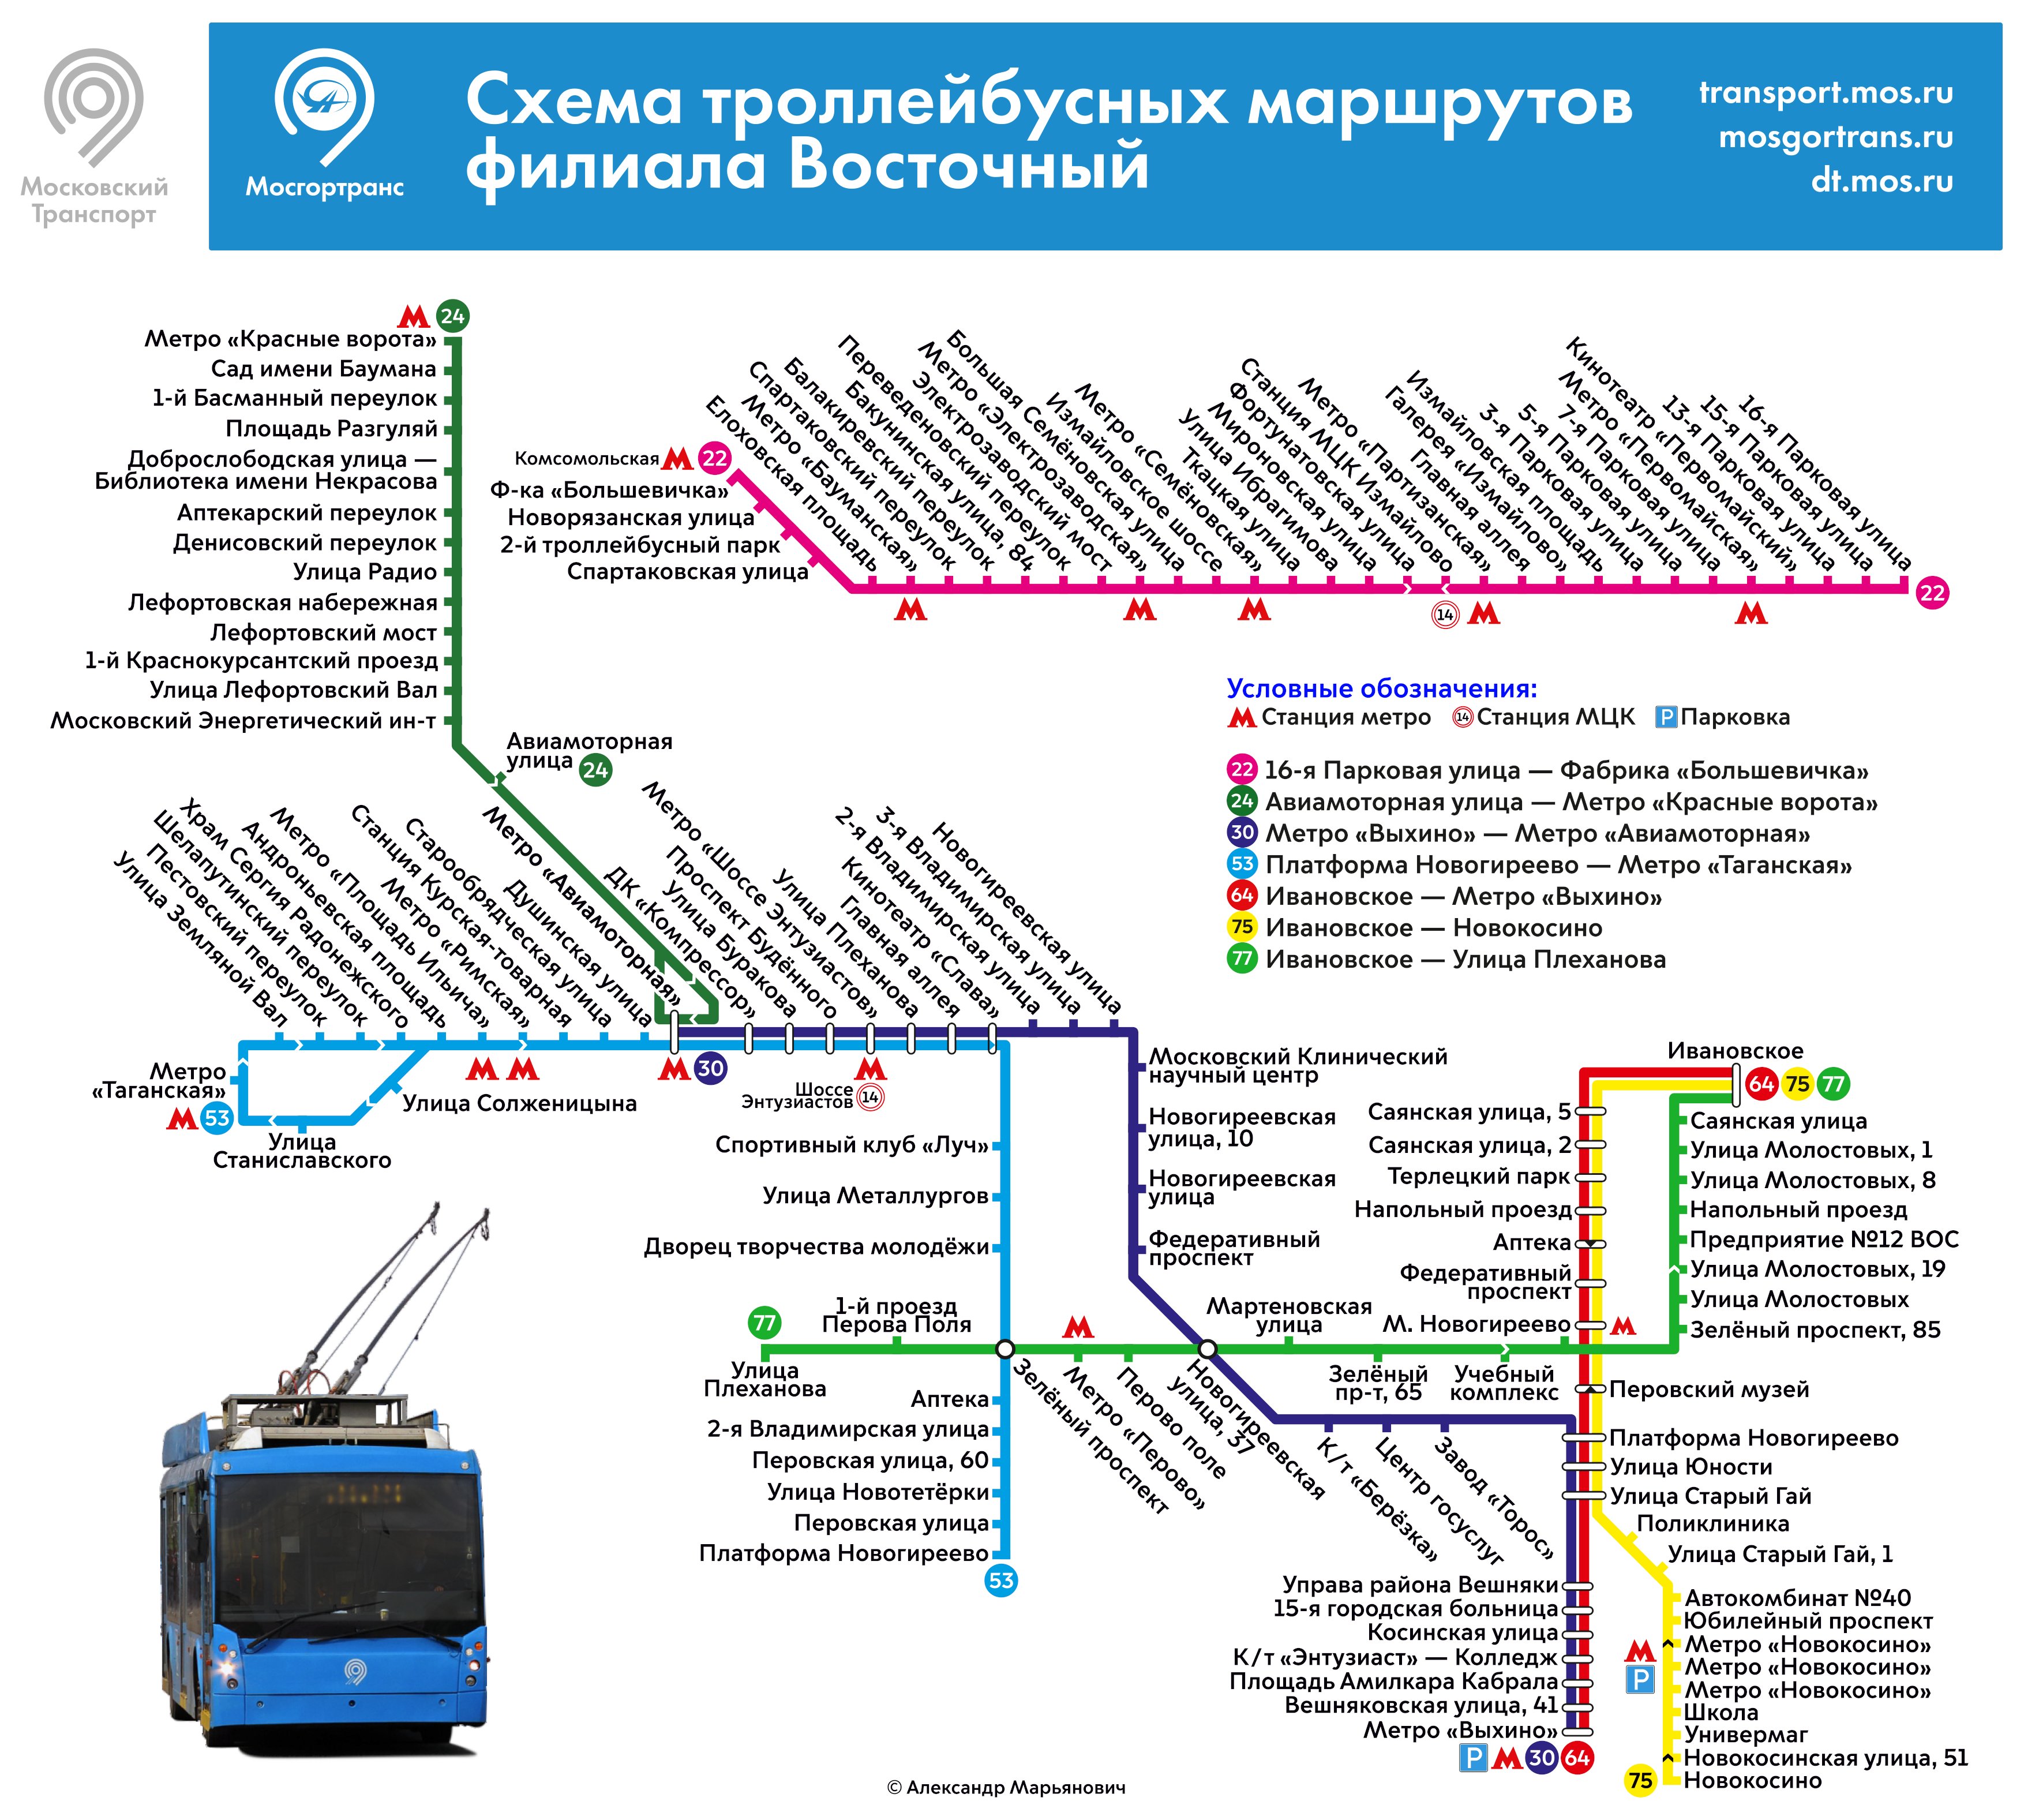 Каким троллейбусом добраться. Схема маршрутов троллейбусов Москвы. Схема маршрутов троллейбусов СПБ парк 1. Московский троллейбус схема 2015. Схема троллейбусов 8 троллейбусный парк.